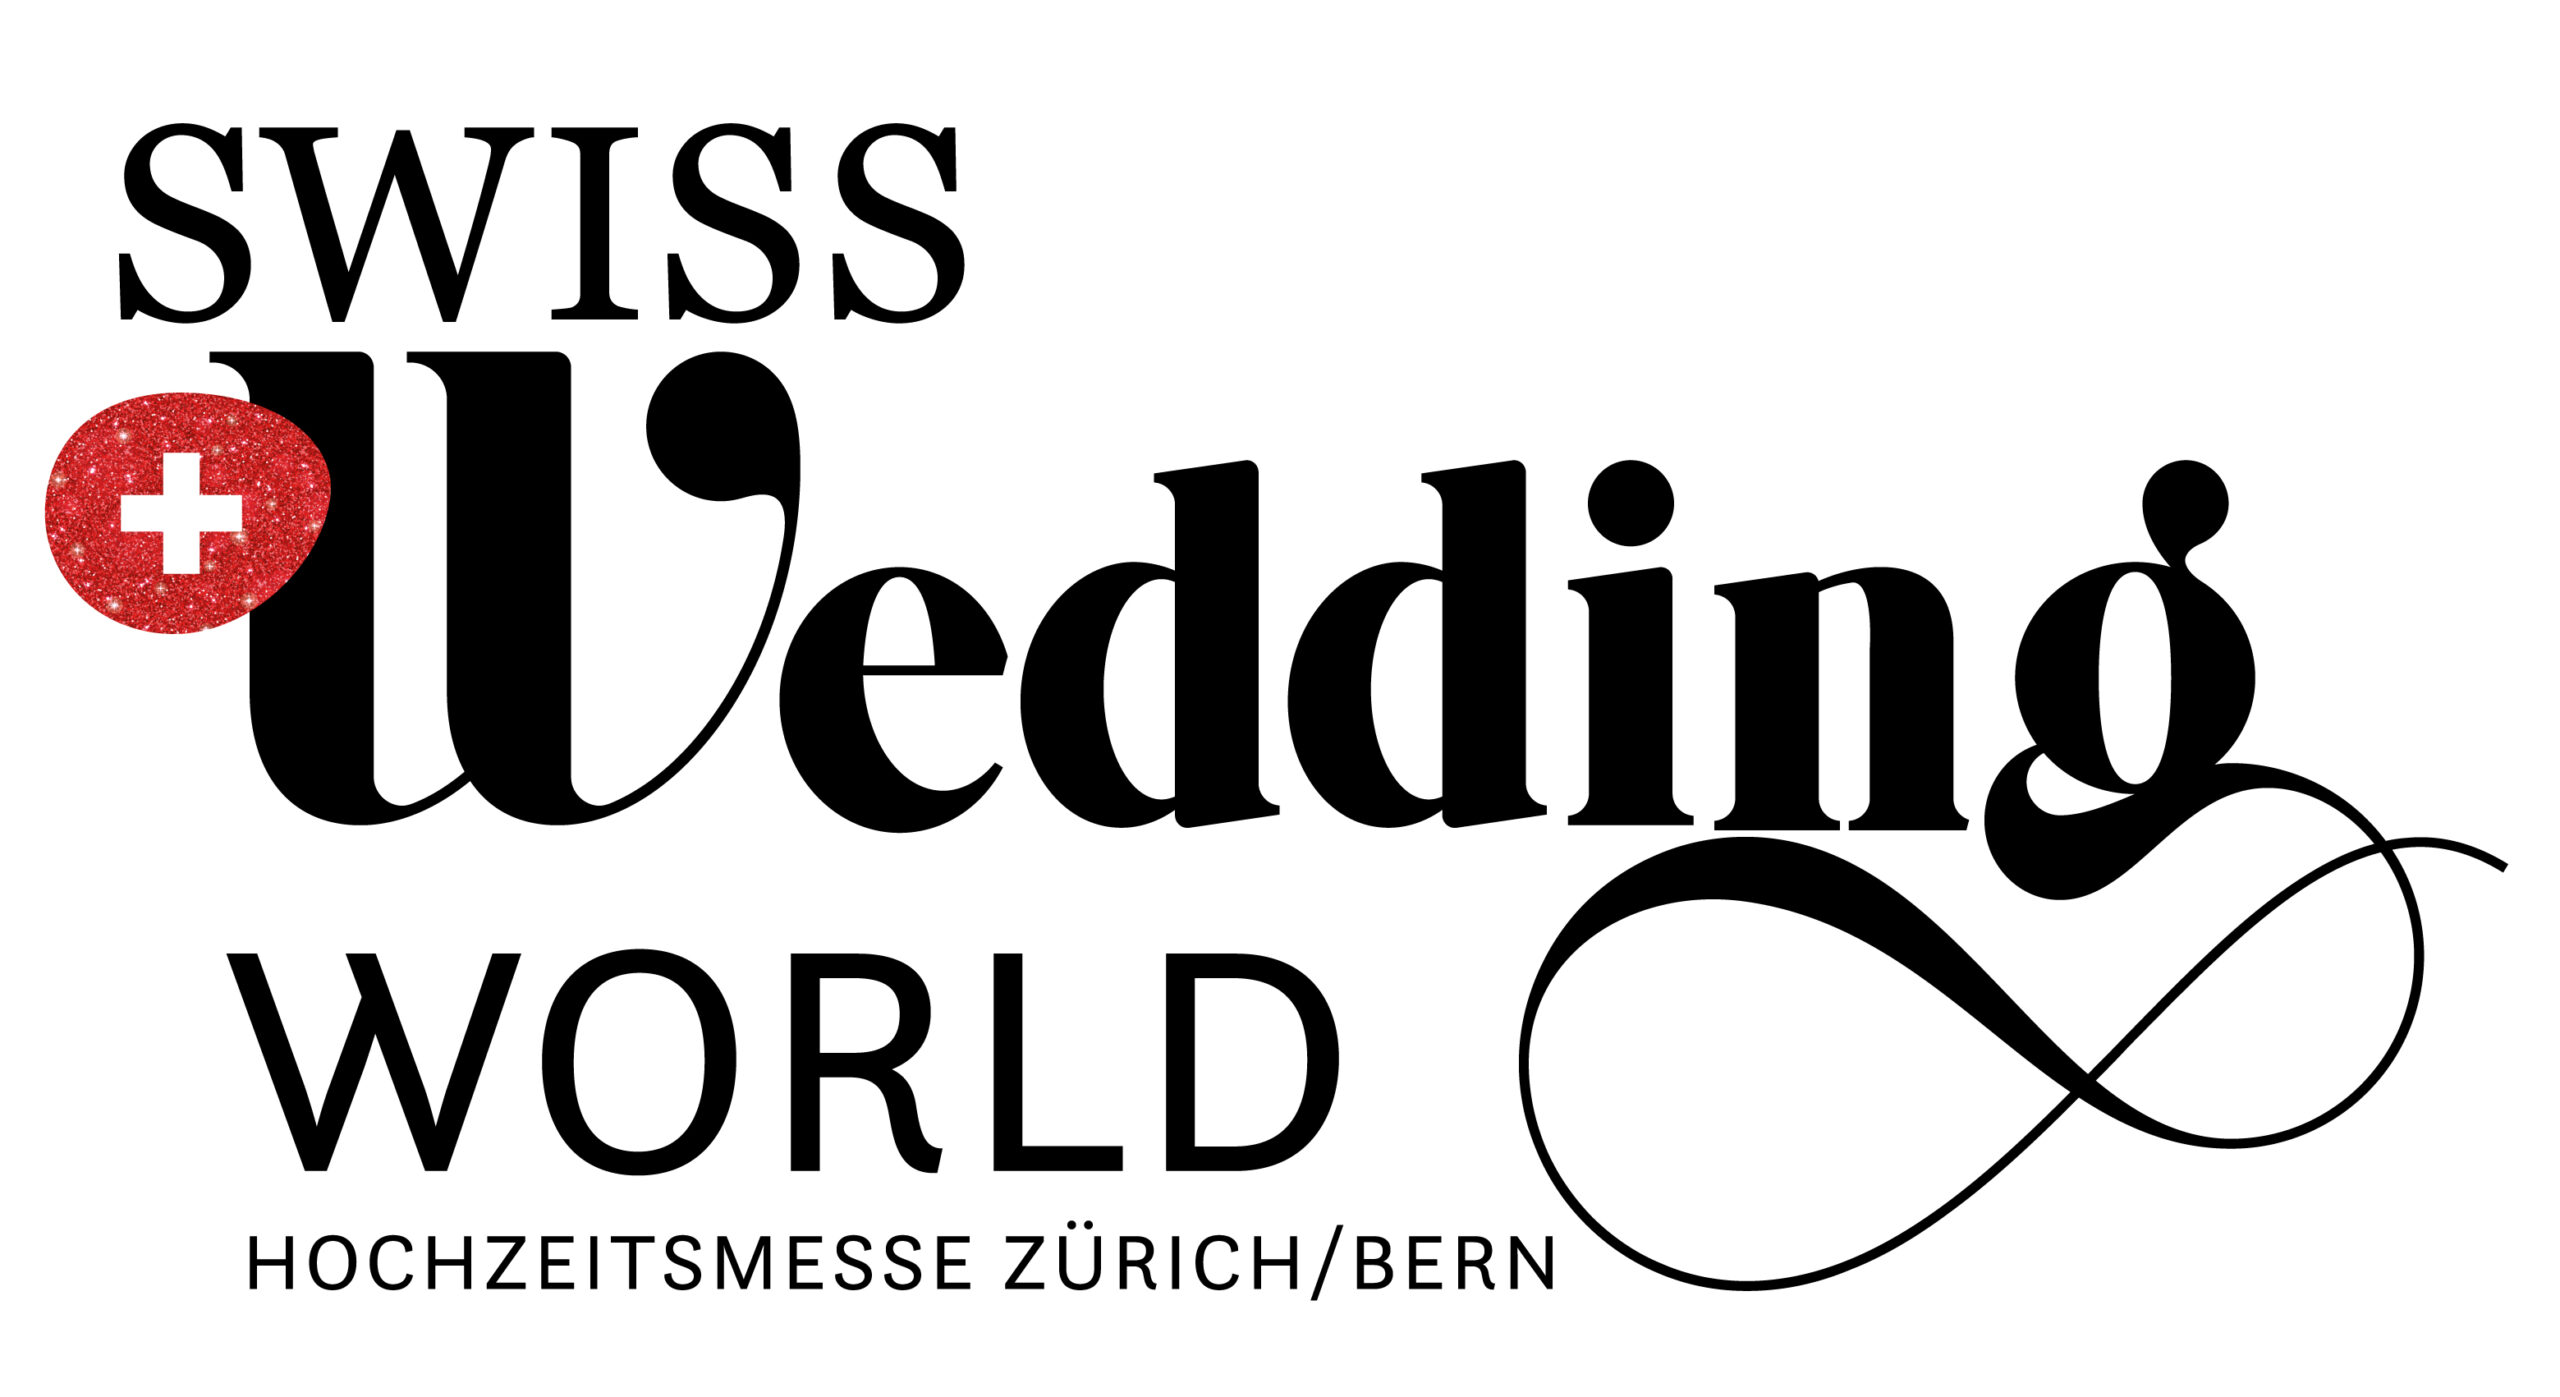 Swiss Wedding World